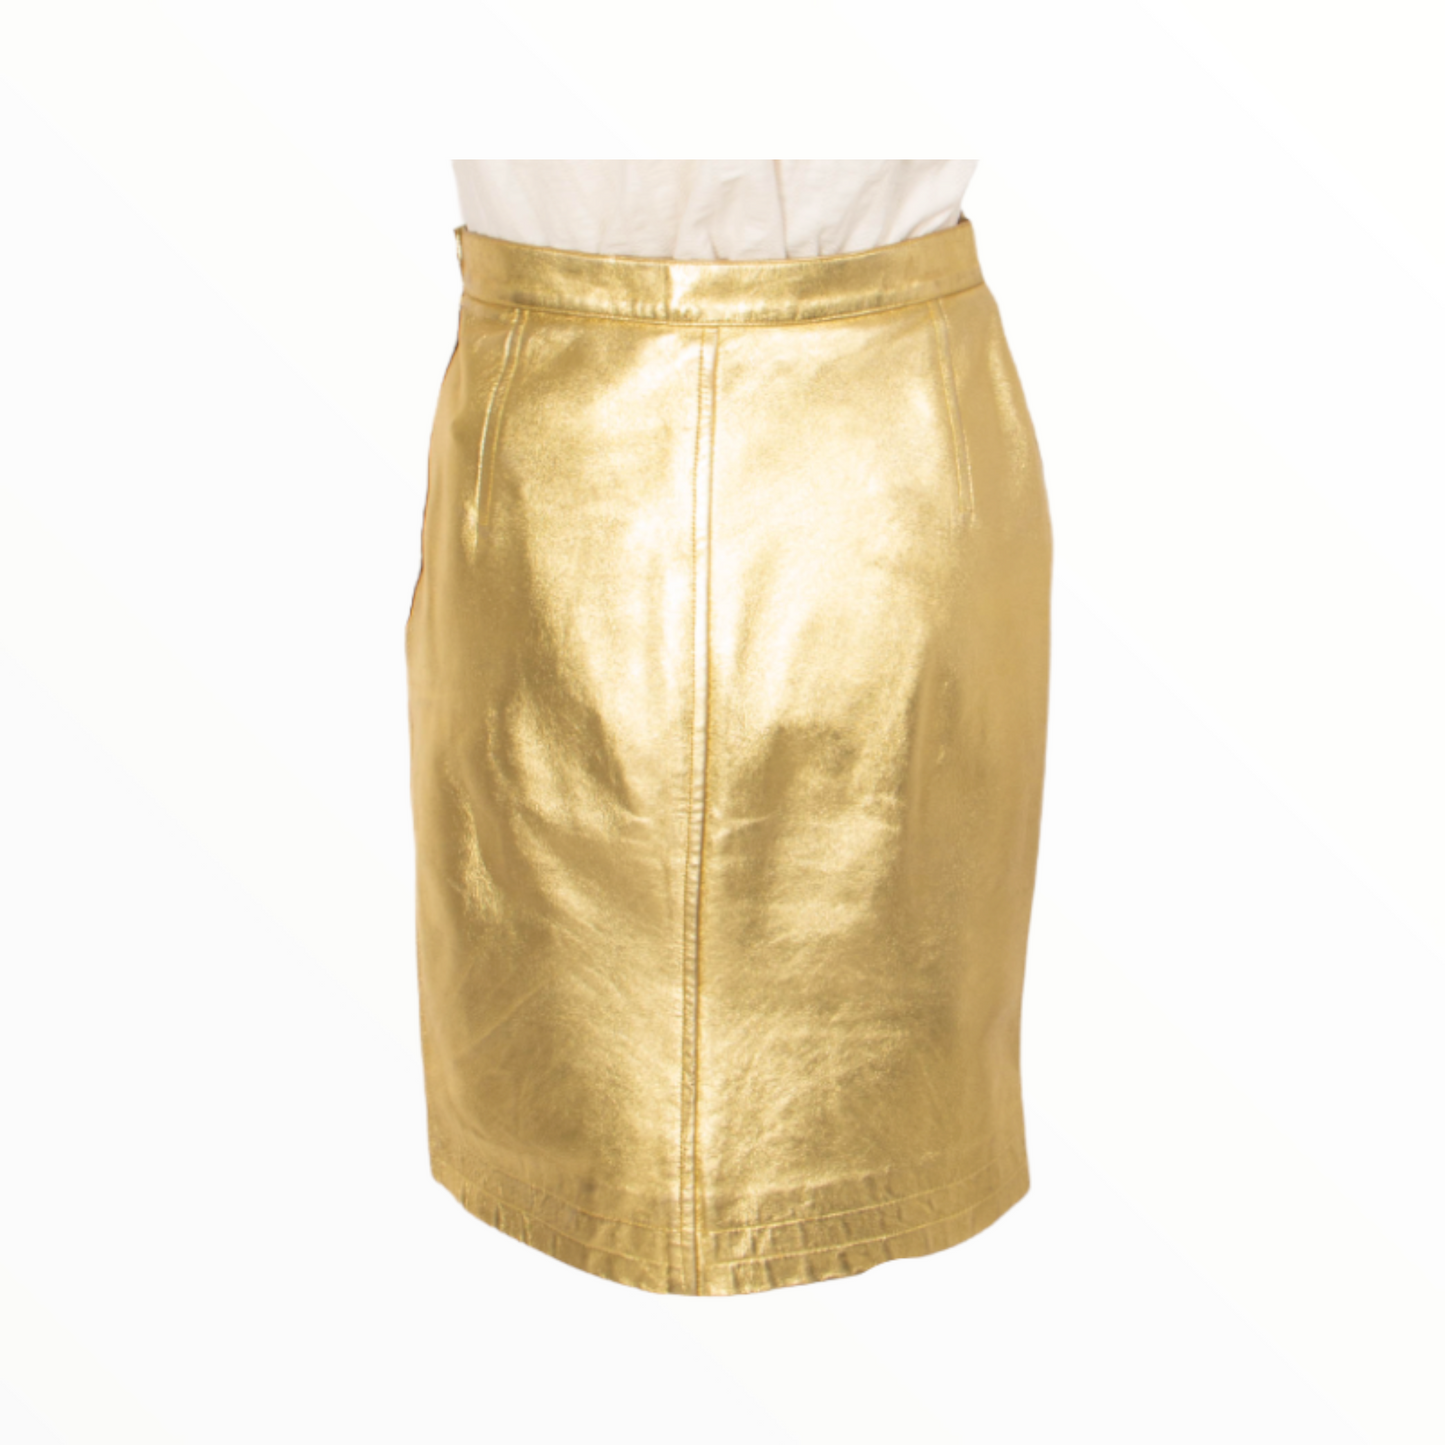 Yves Saint Laurent Rive Gauche vintage gold leather skirt - M - 1990s